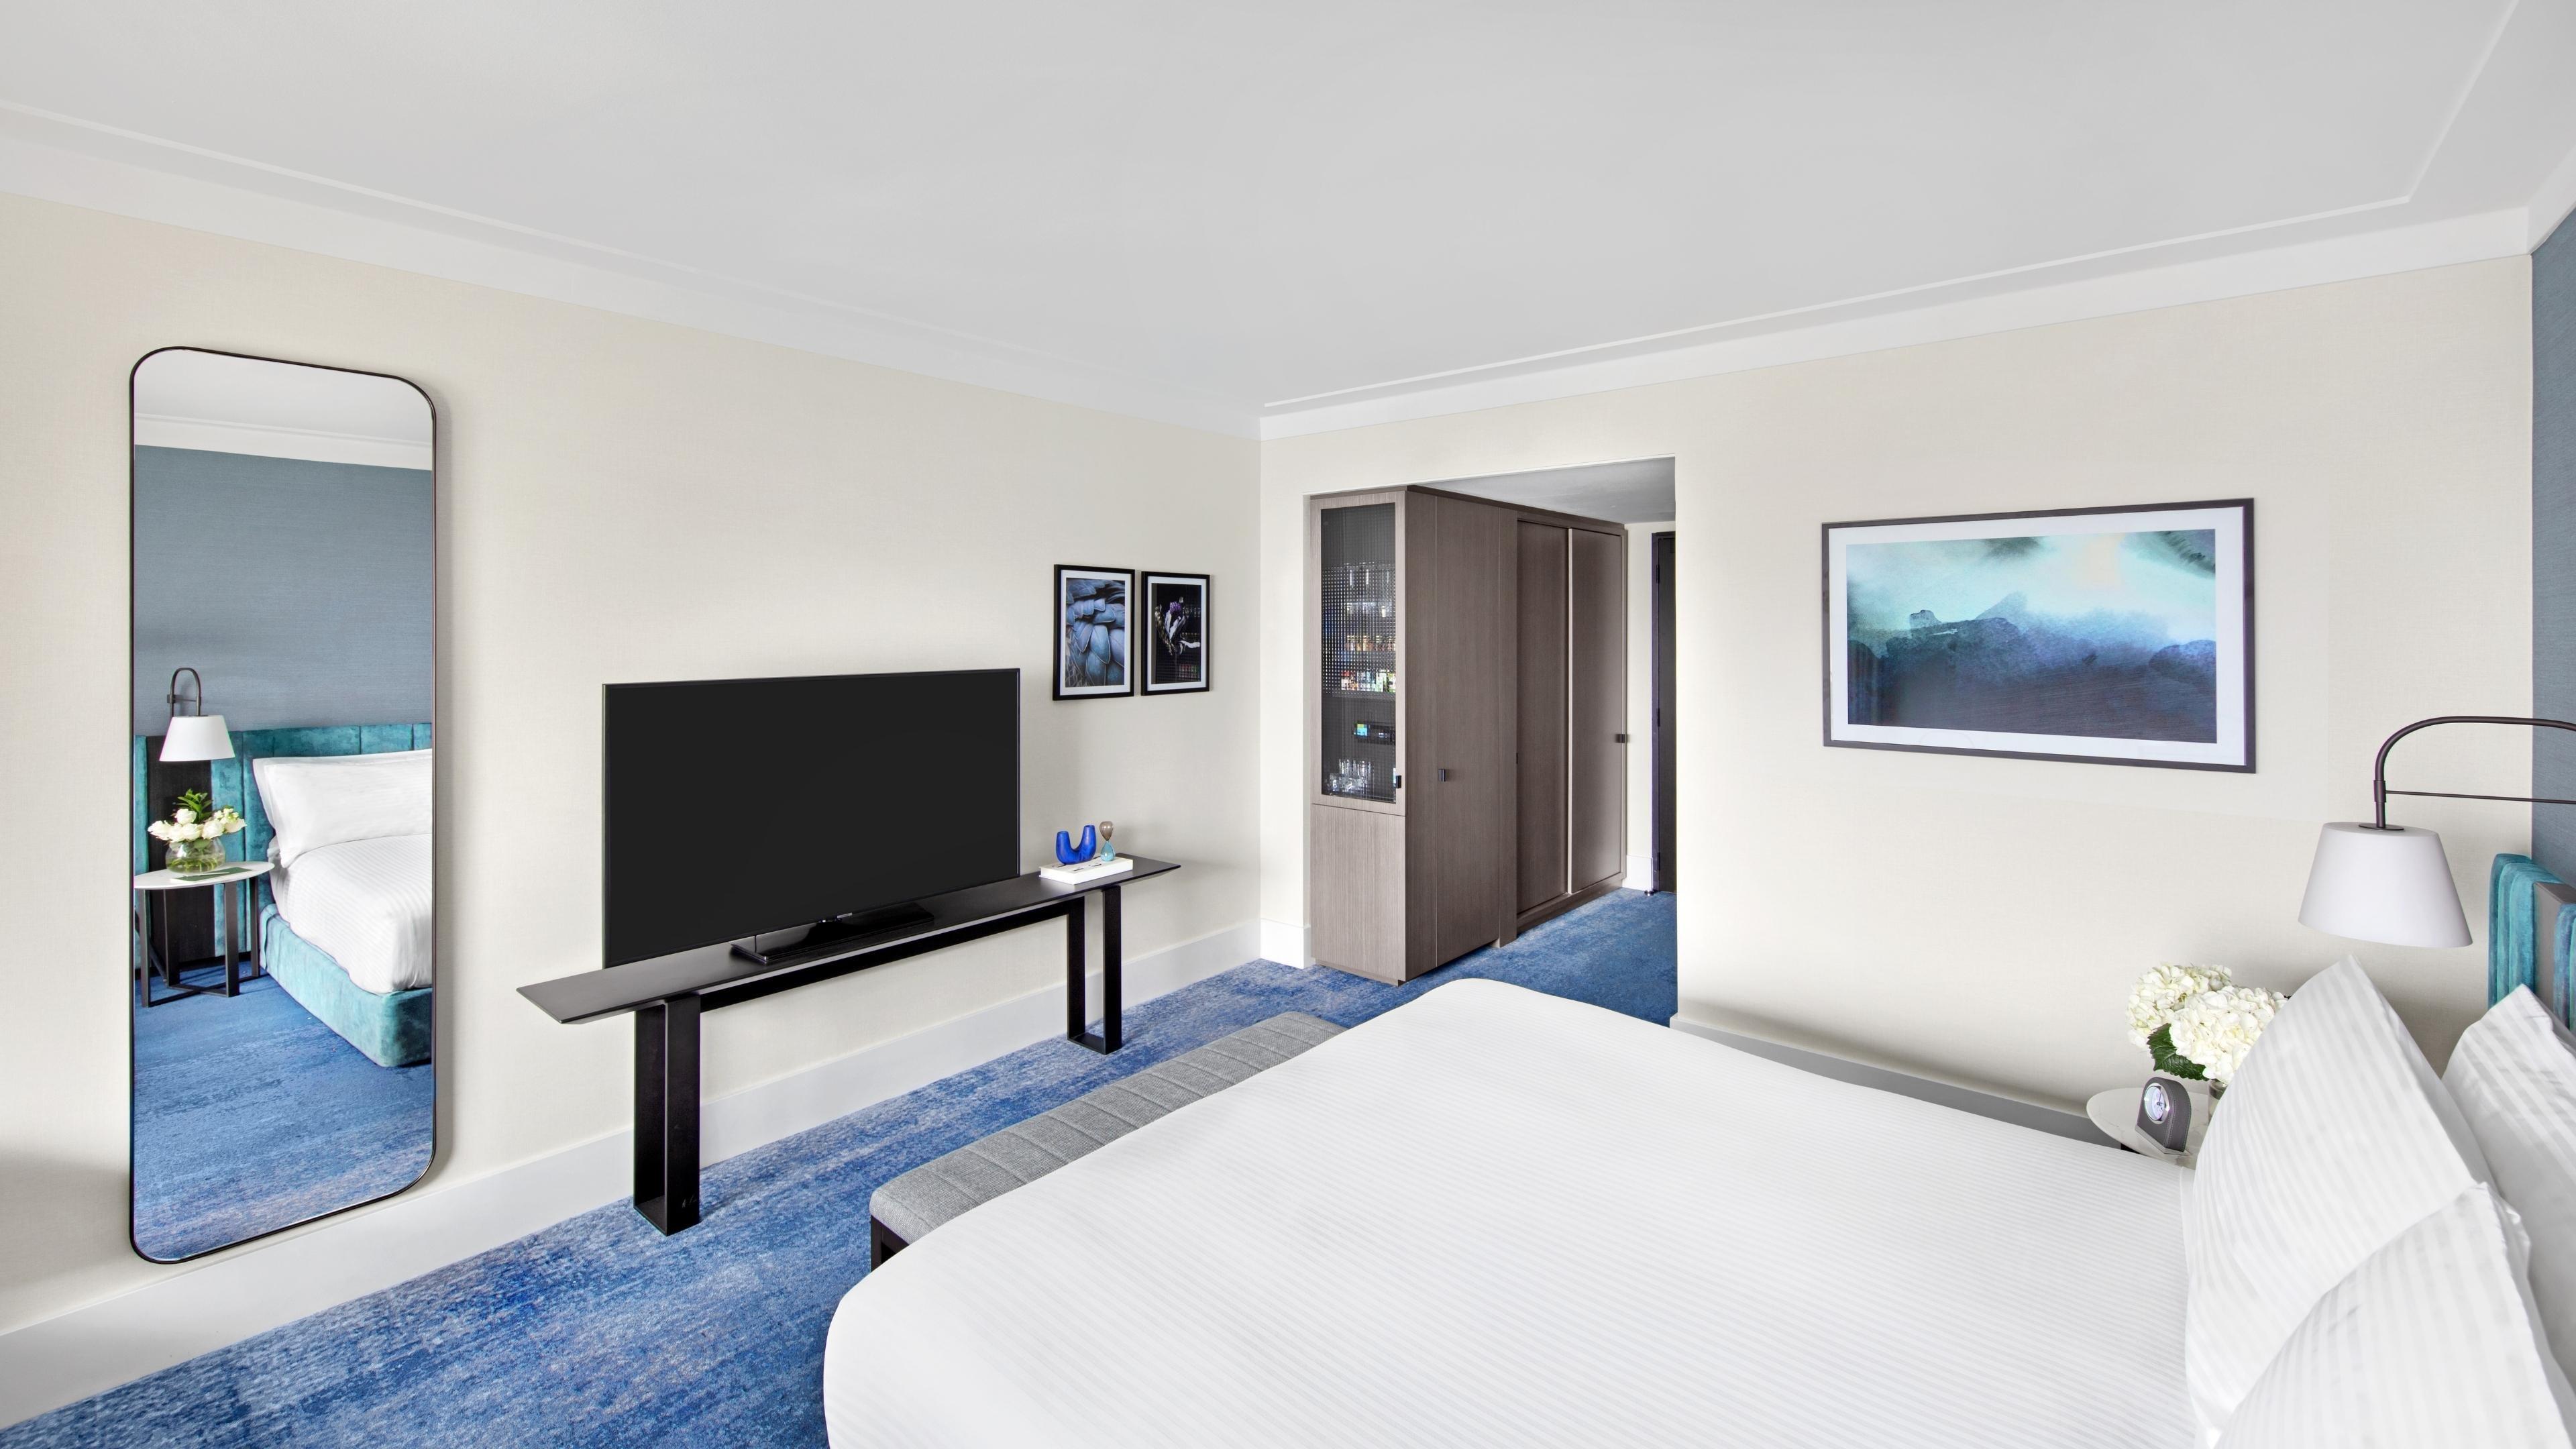 Hotel Intercontinental Sydney